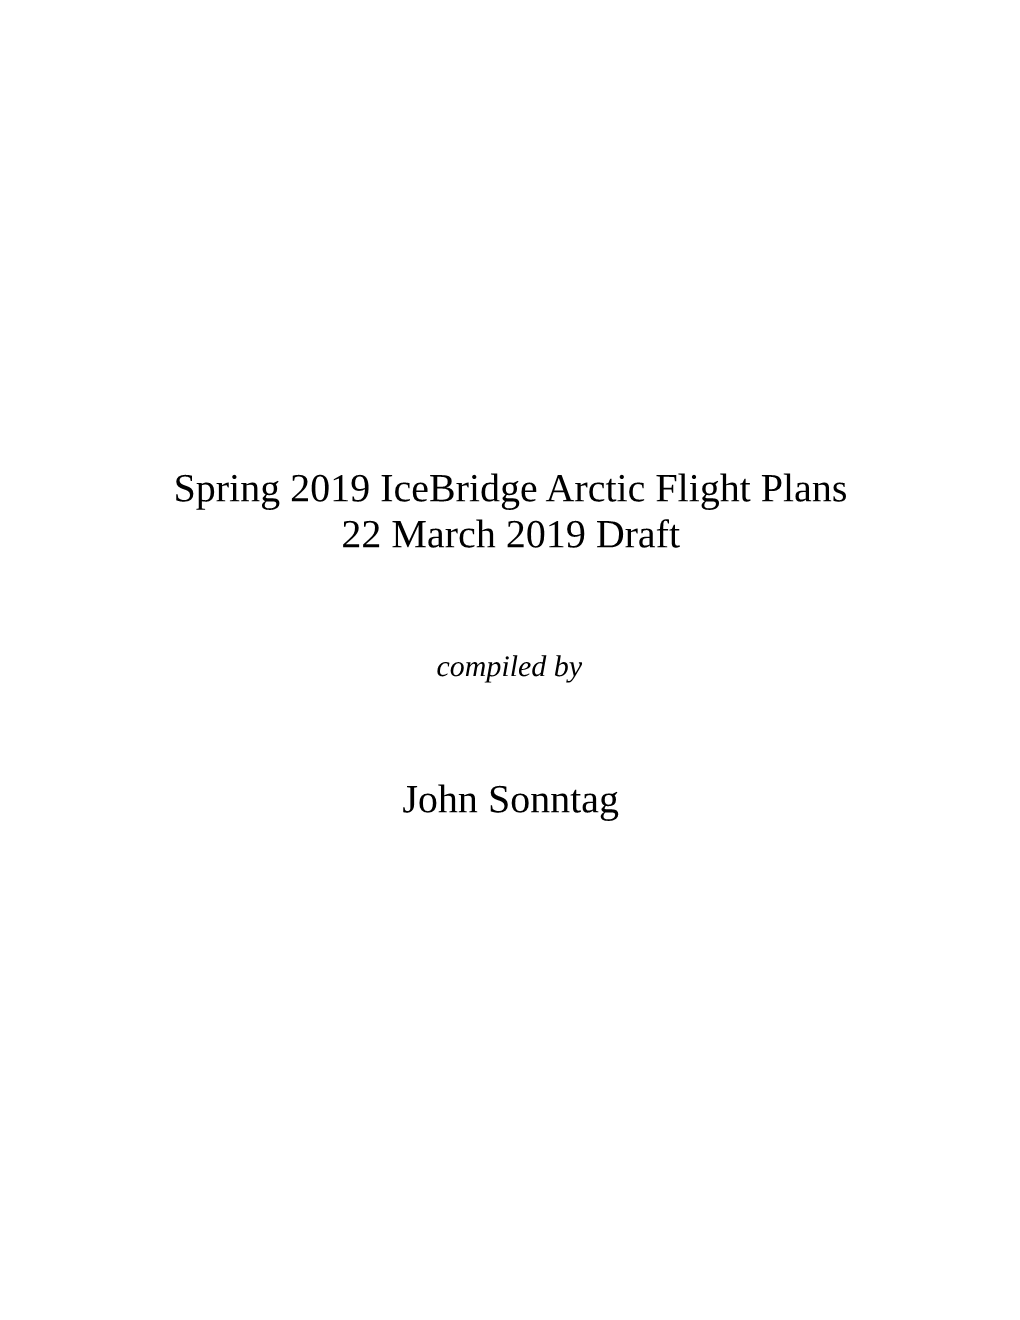 Spring 2019 Icebridge Arctic Flight Plans 22 March 2019 Draft John Sonntag